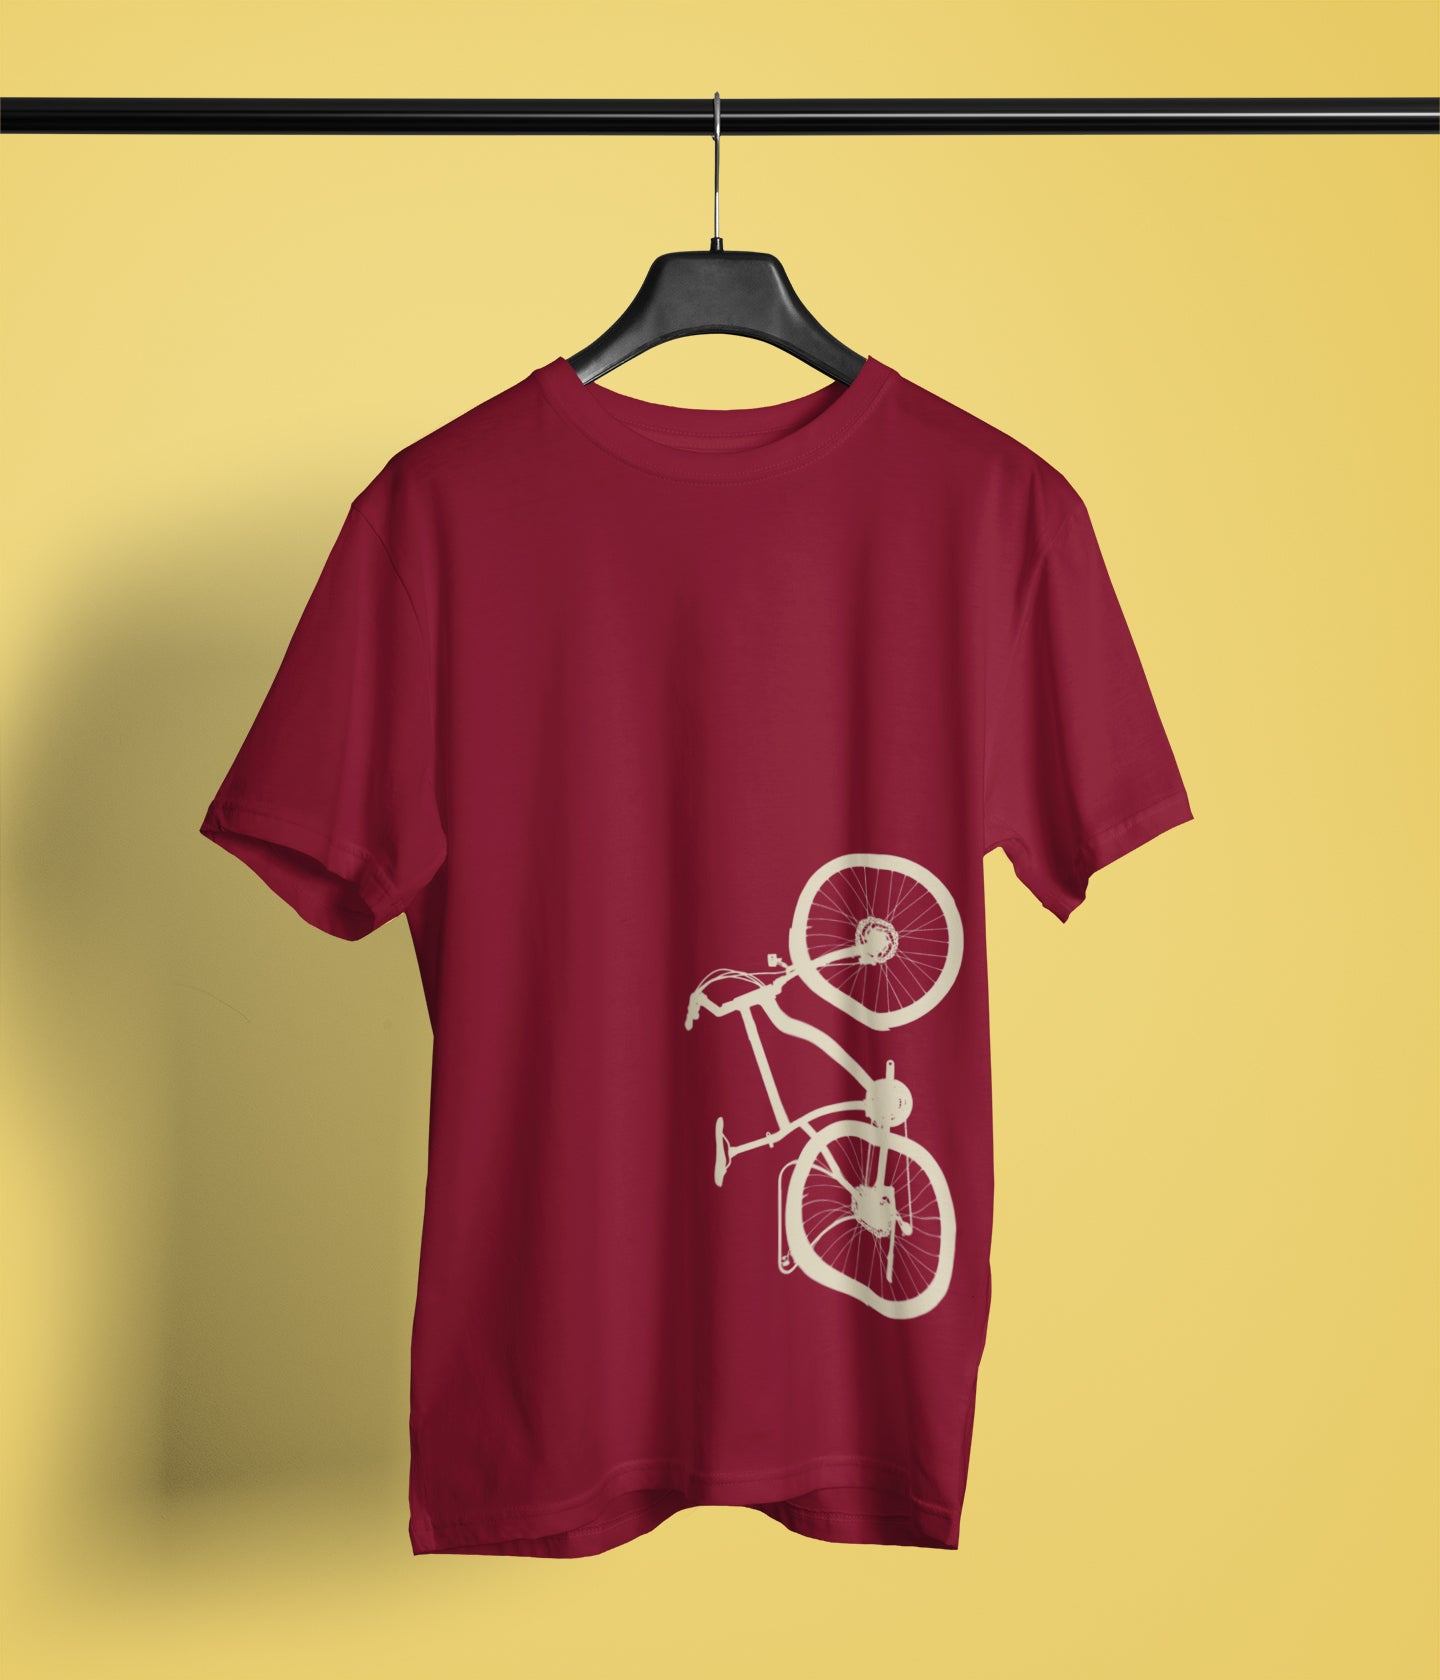 Semantic Half Sleeve Cotton T-shirt - Printed Bicycle